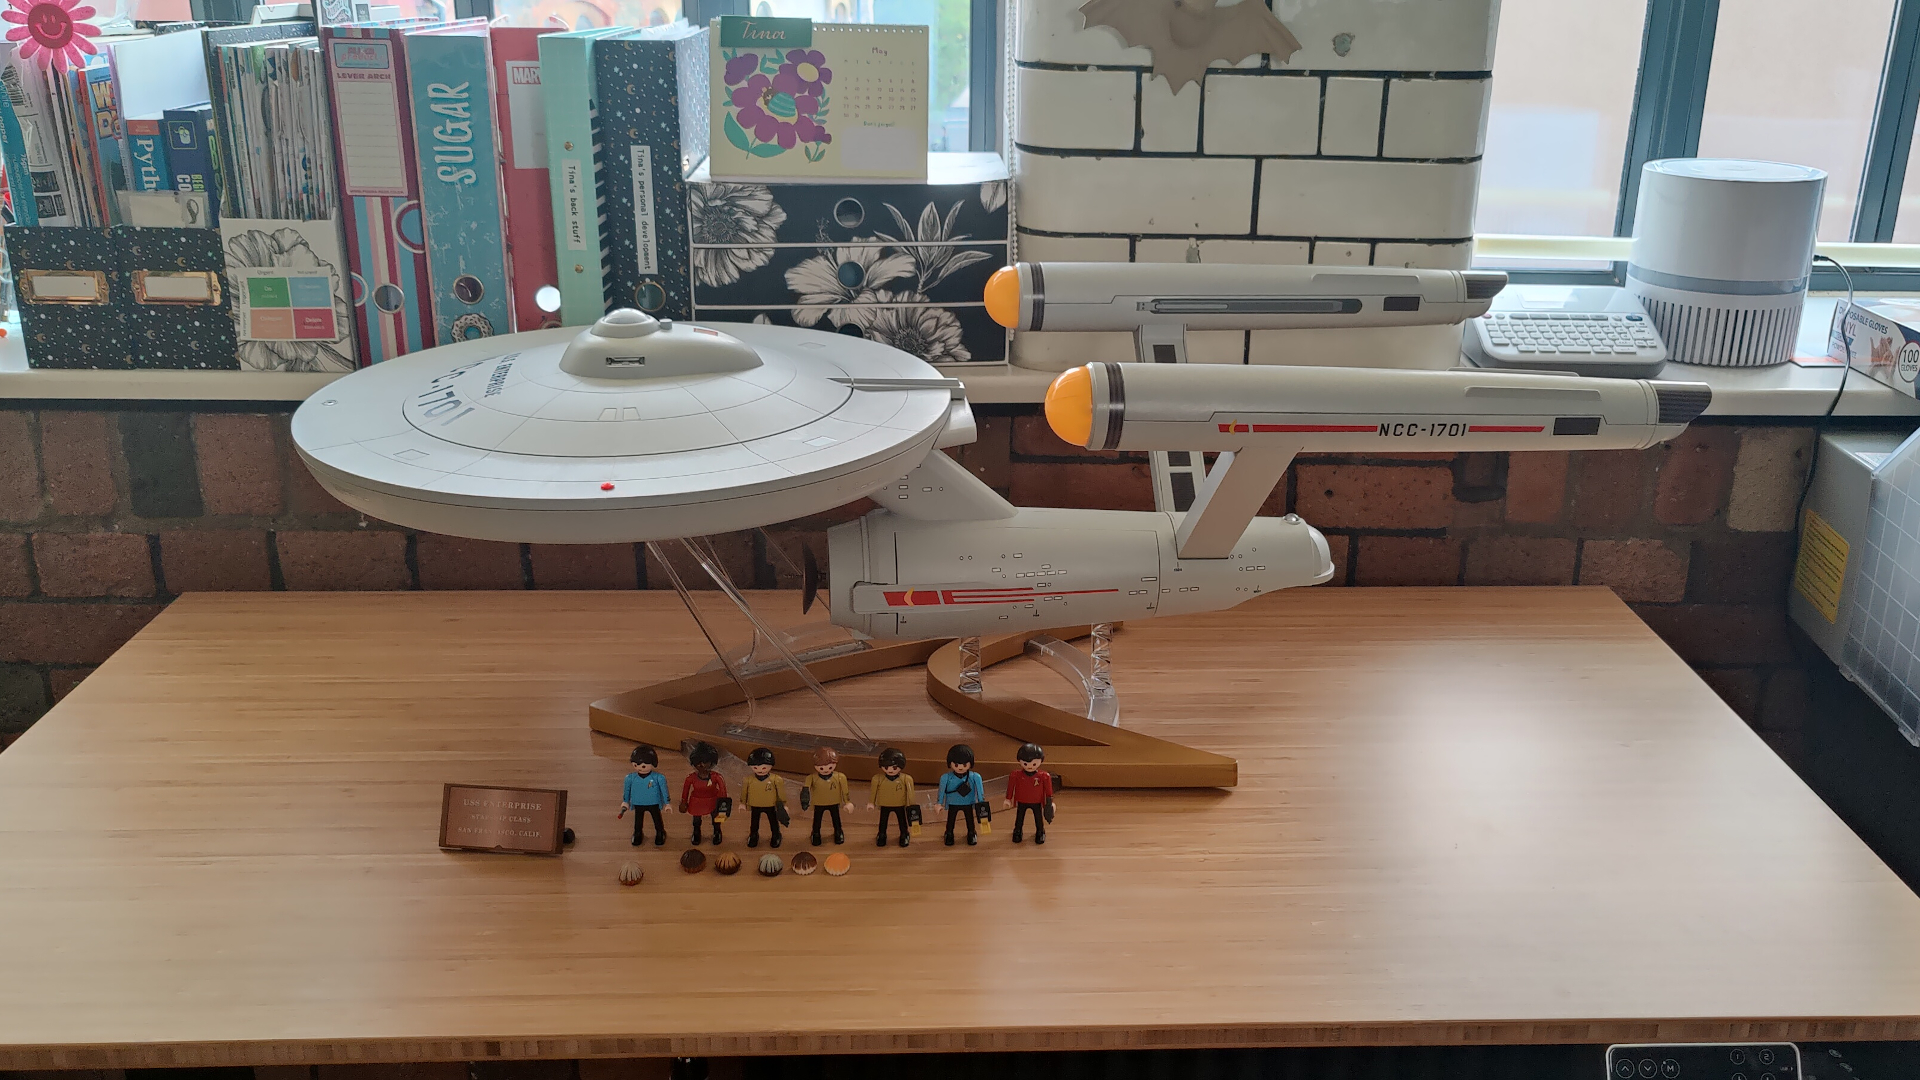 Playmobil Star Trek Bird of Prey Collector Set